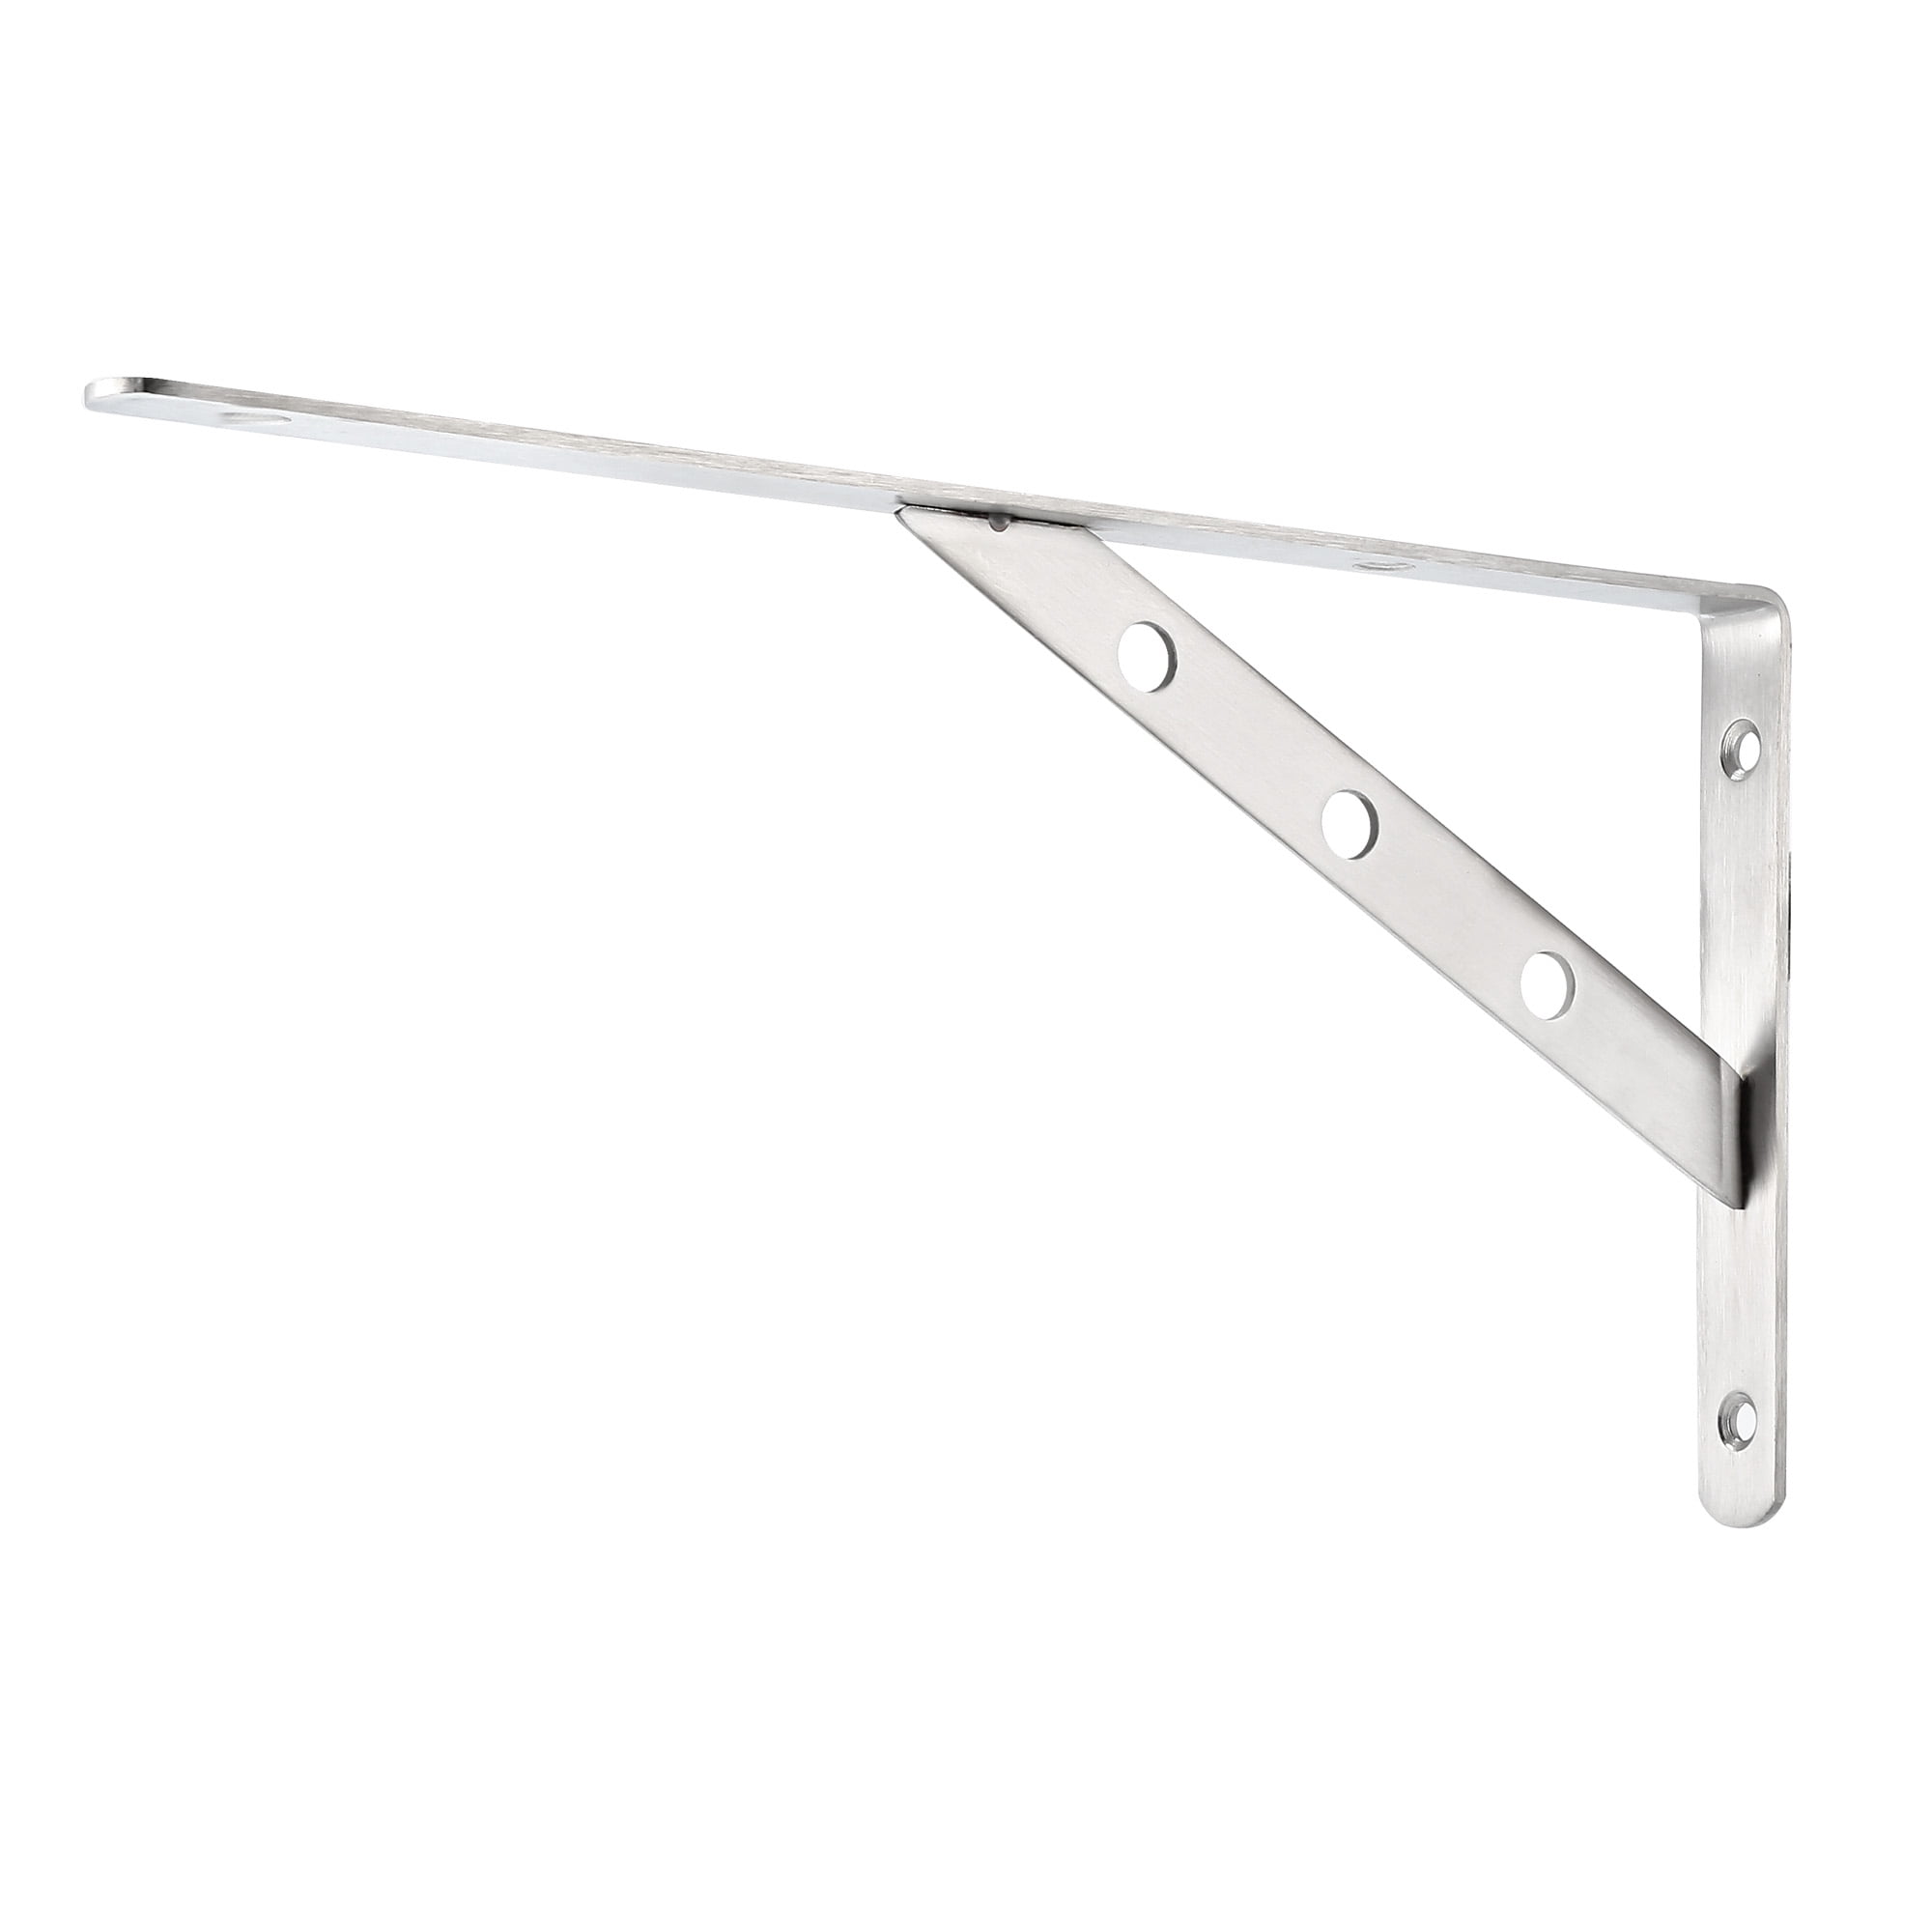 1/4" x 2" x 3" Steel Angle Iron 12in Long Bracing Brackets Welding Shelf 